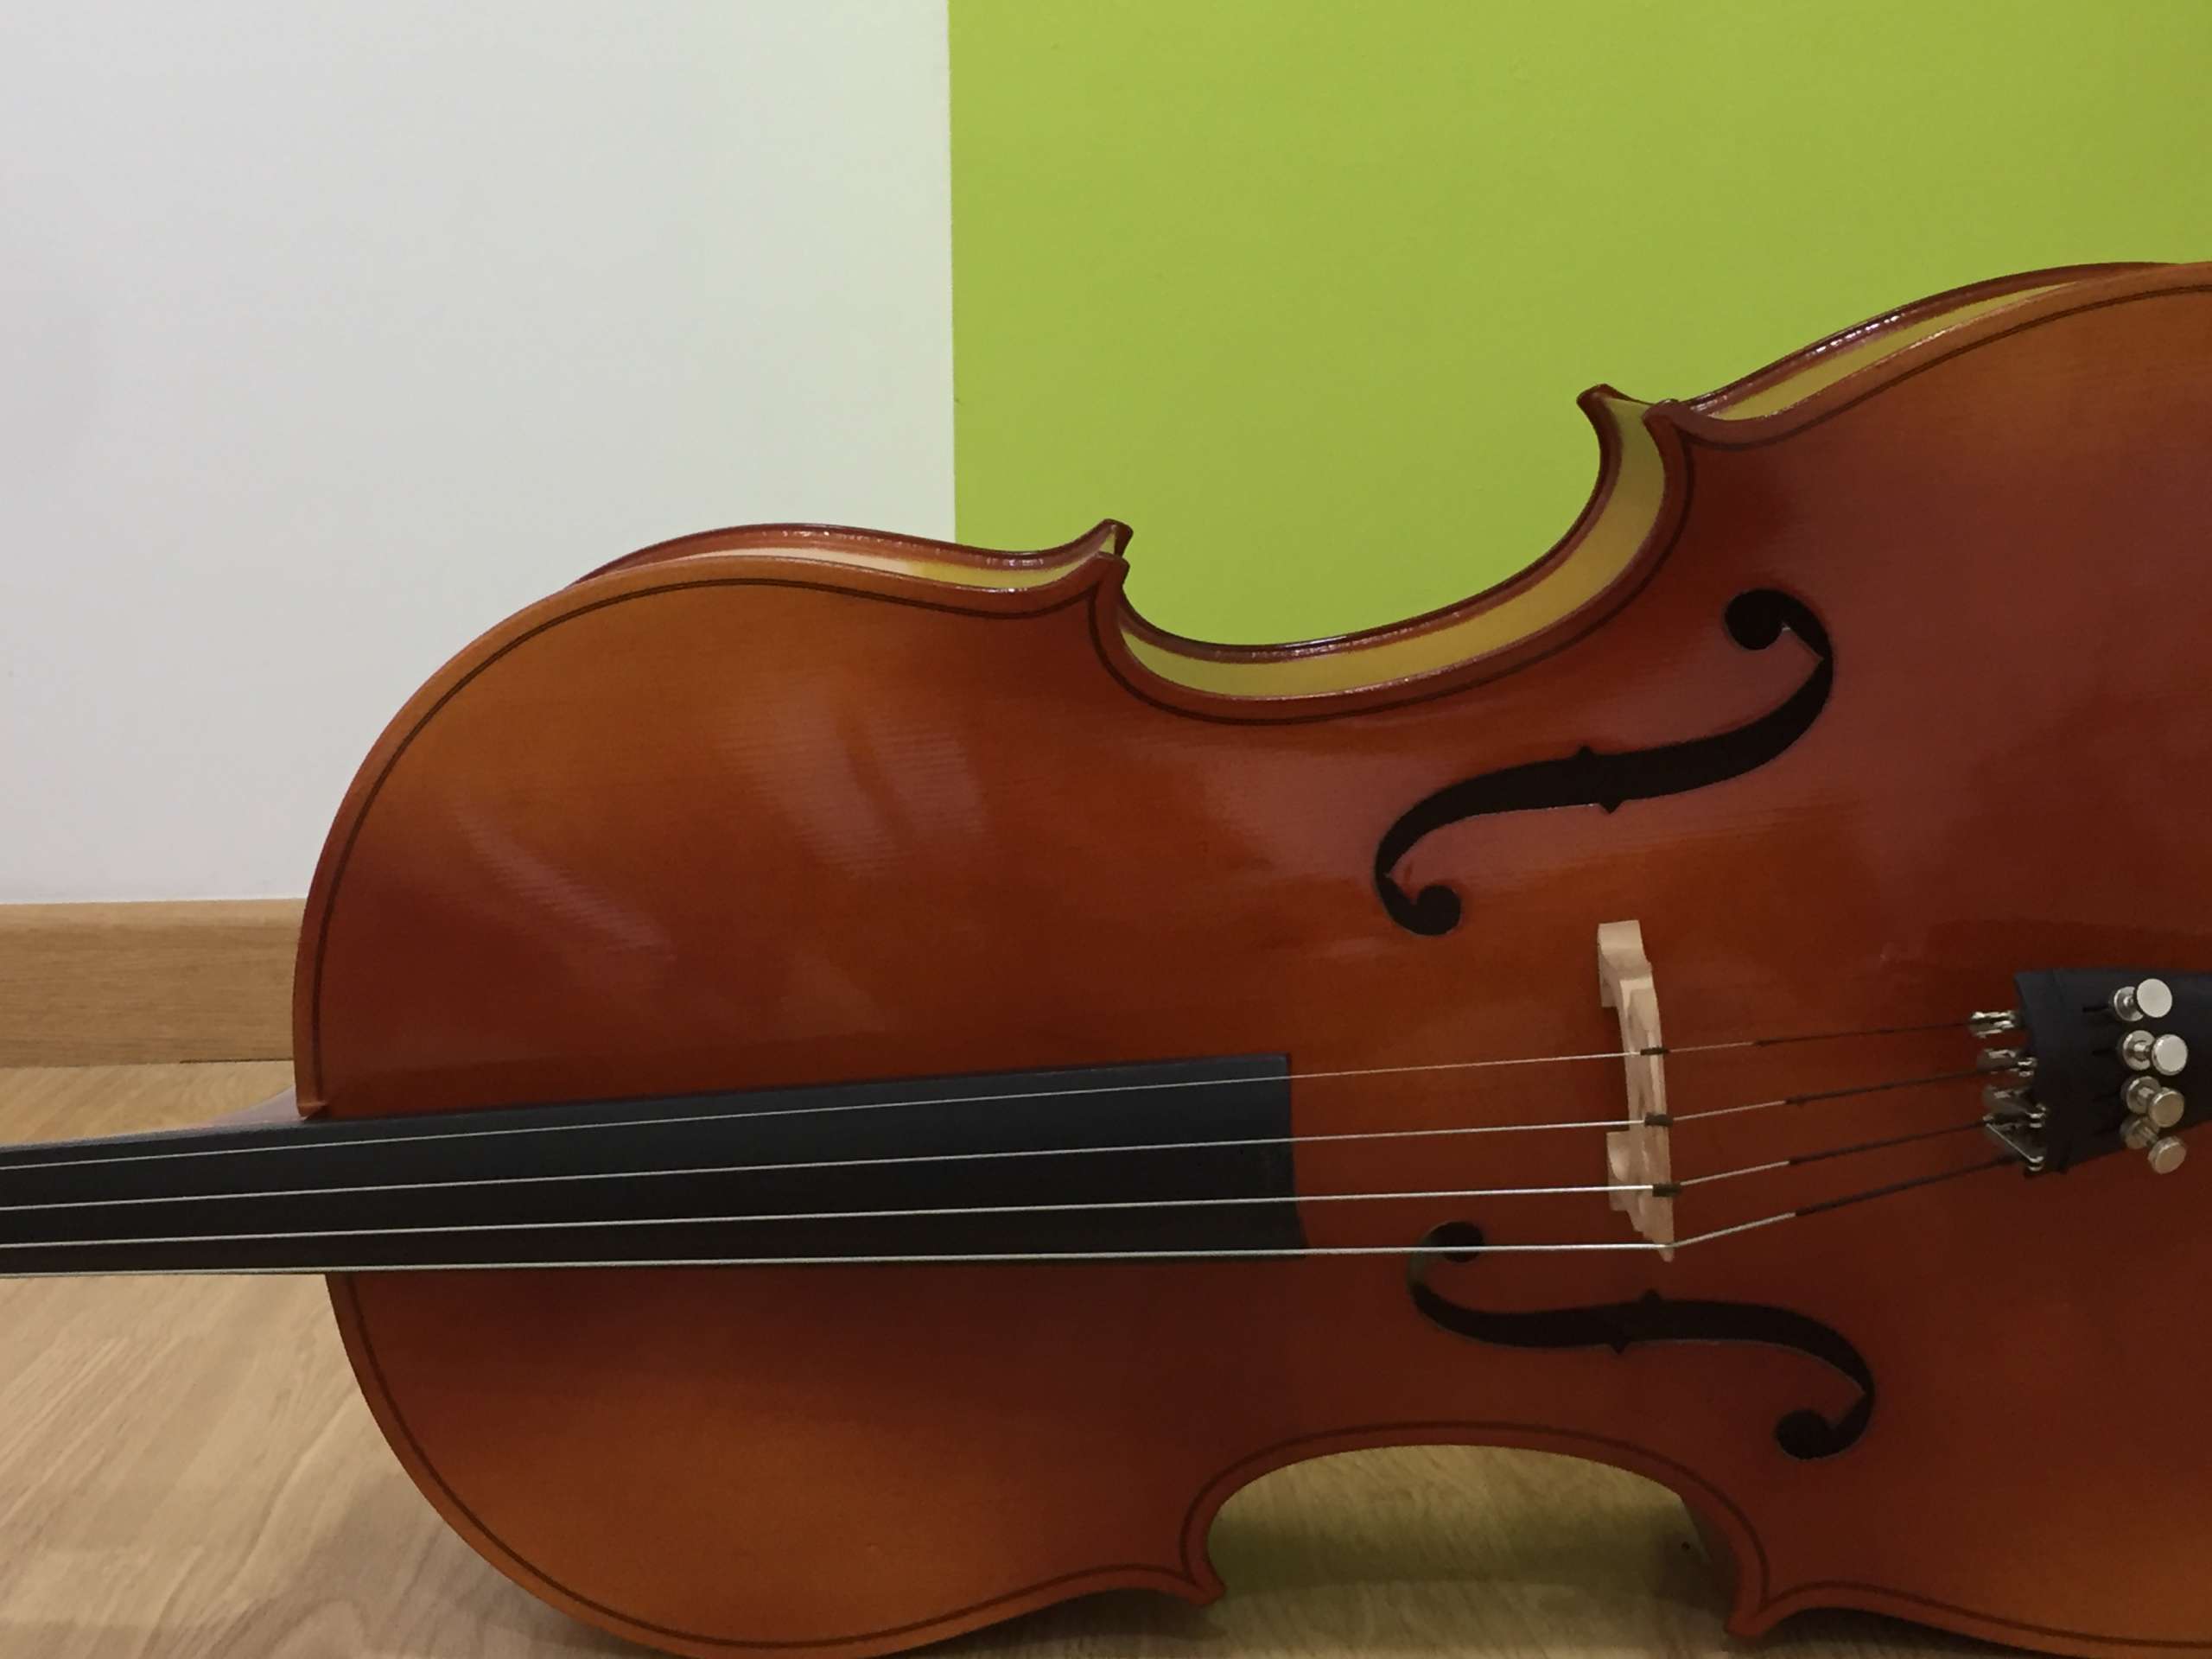 clases de violonchelo escuela de música murcia